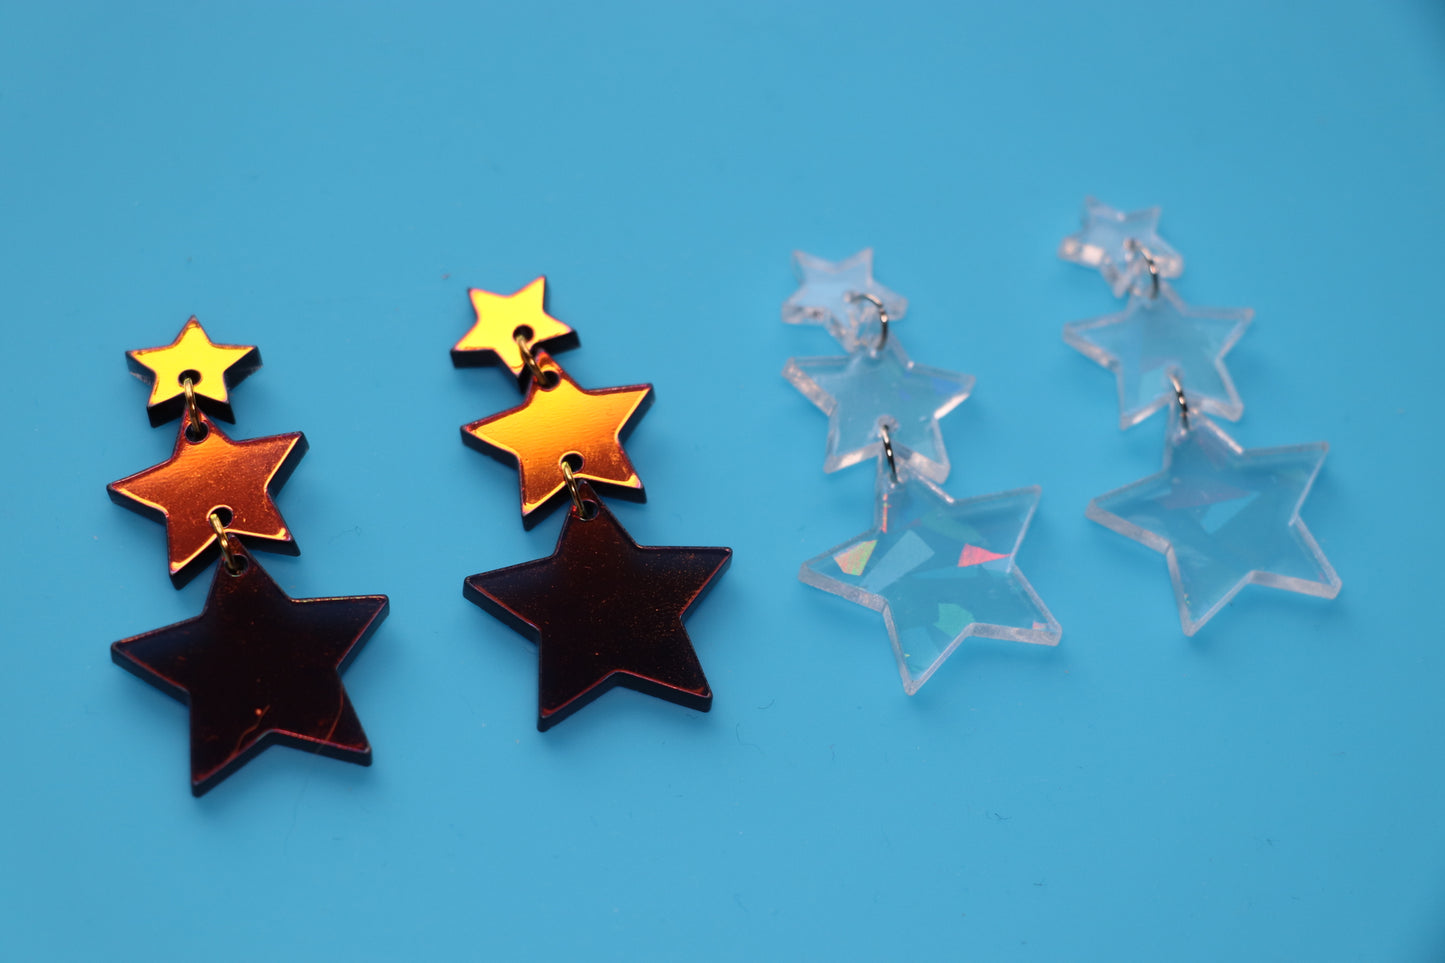 Multidimensional iridescent acrylic star earrings